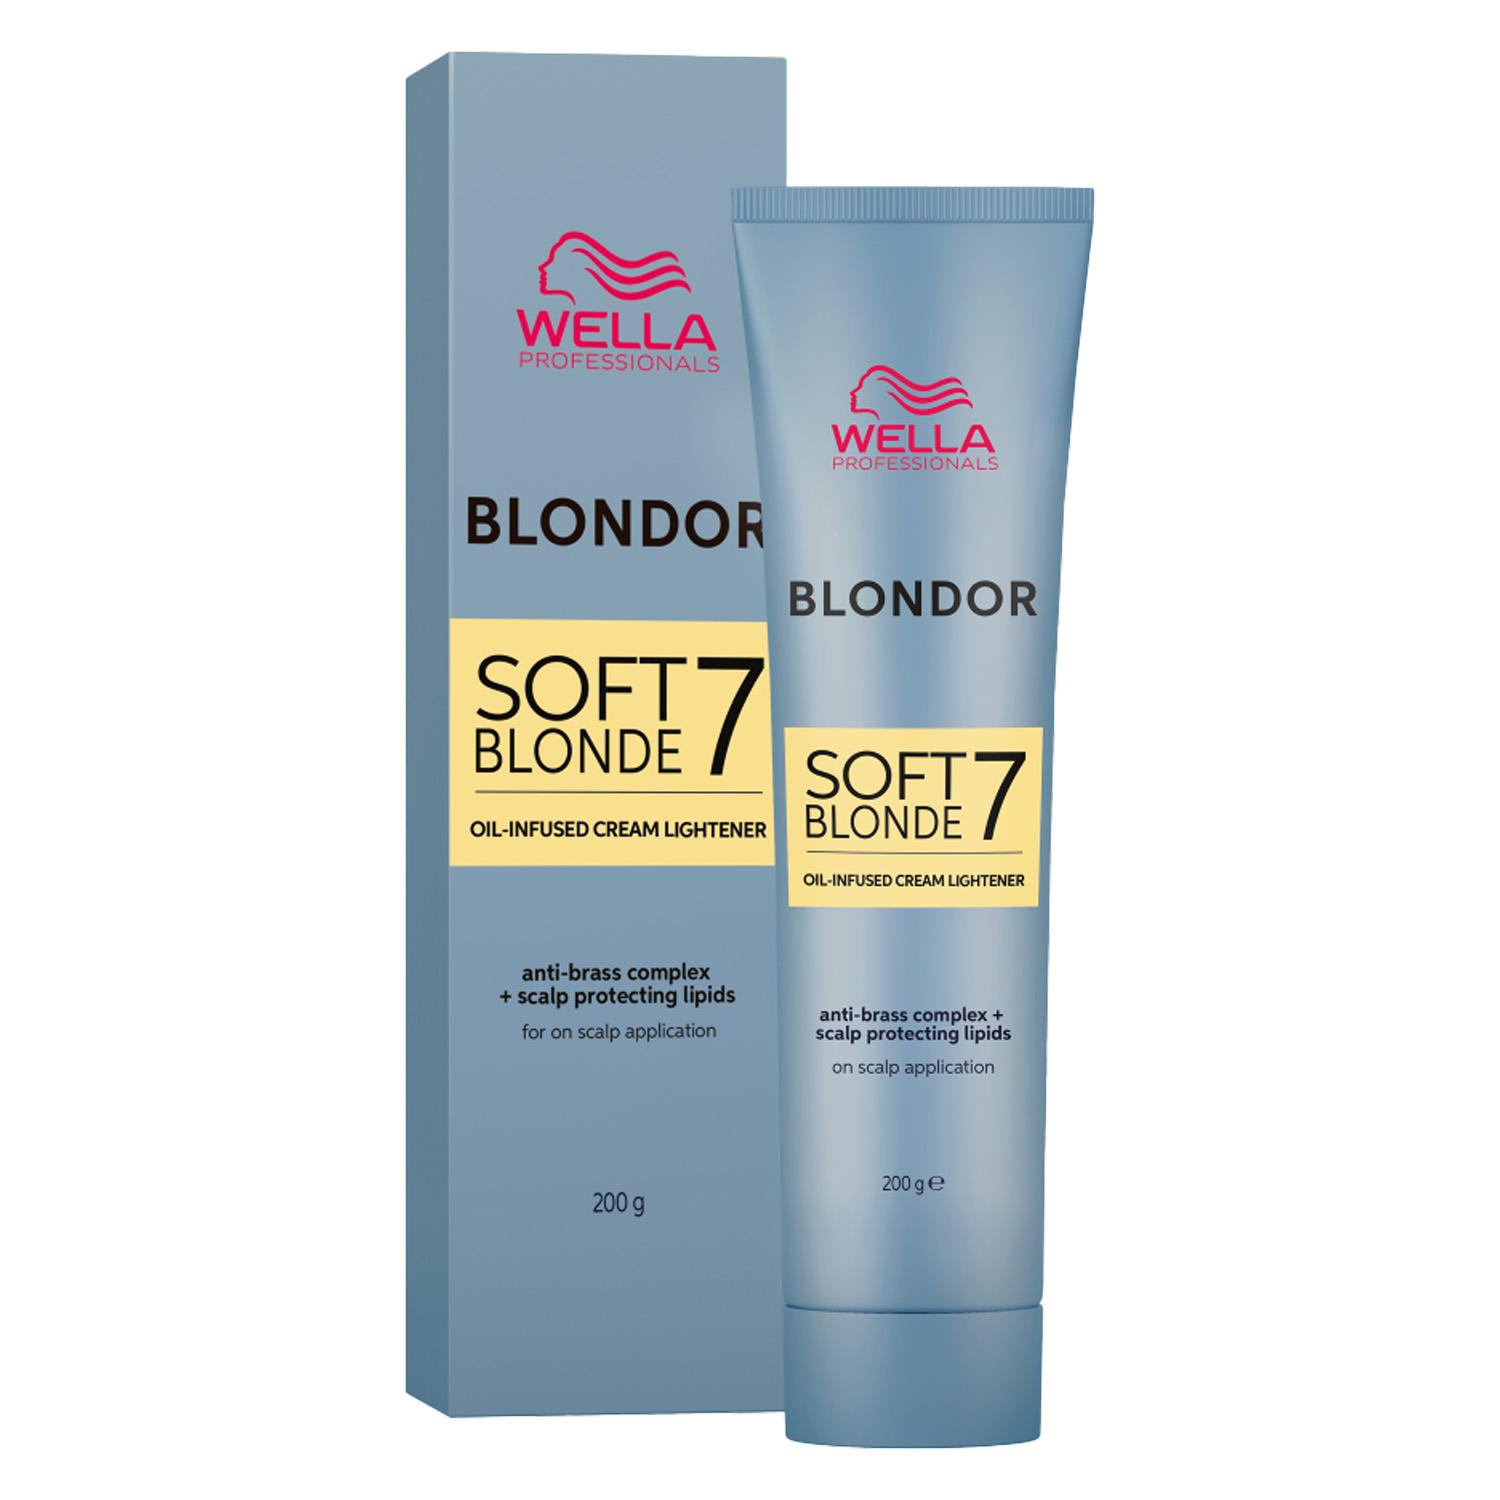 Blondor - Soft Blonde Cream